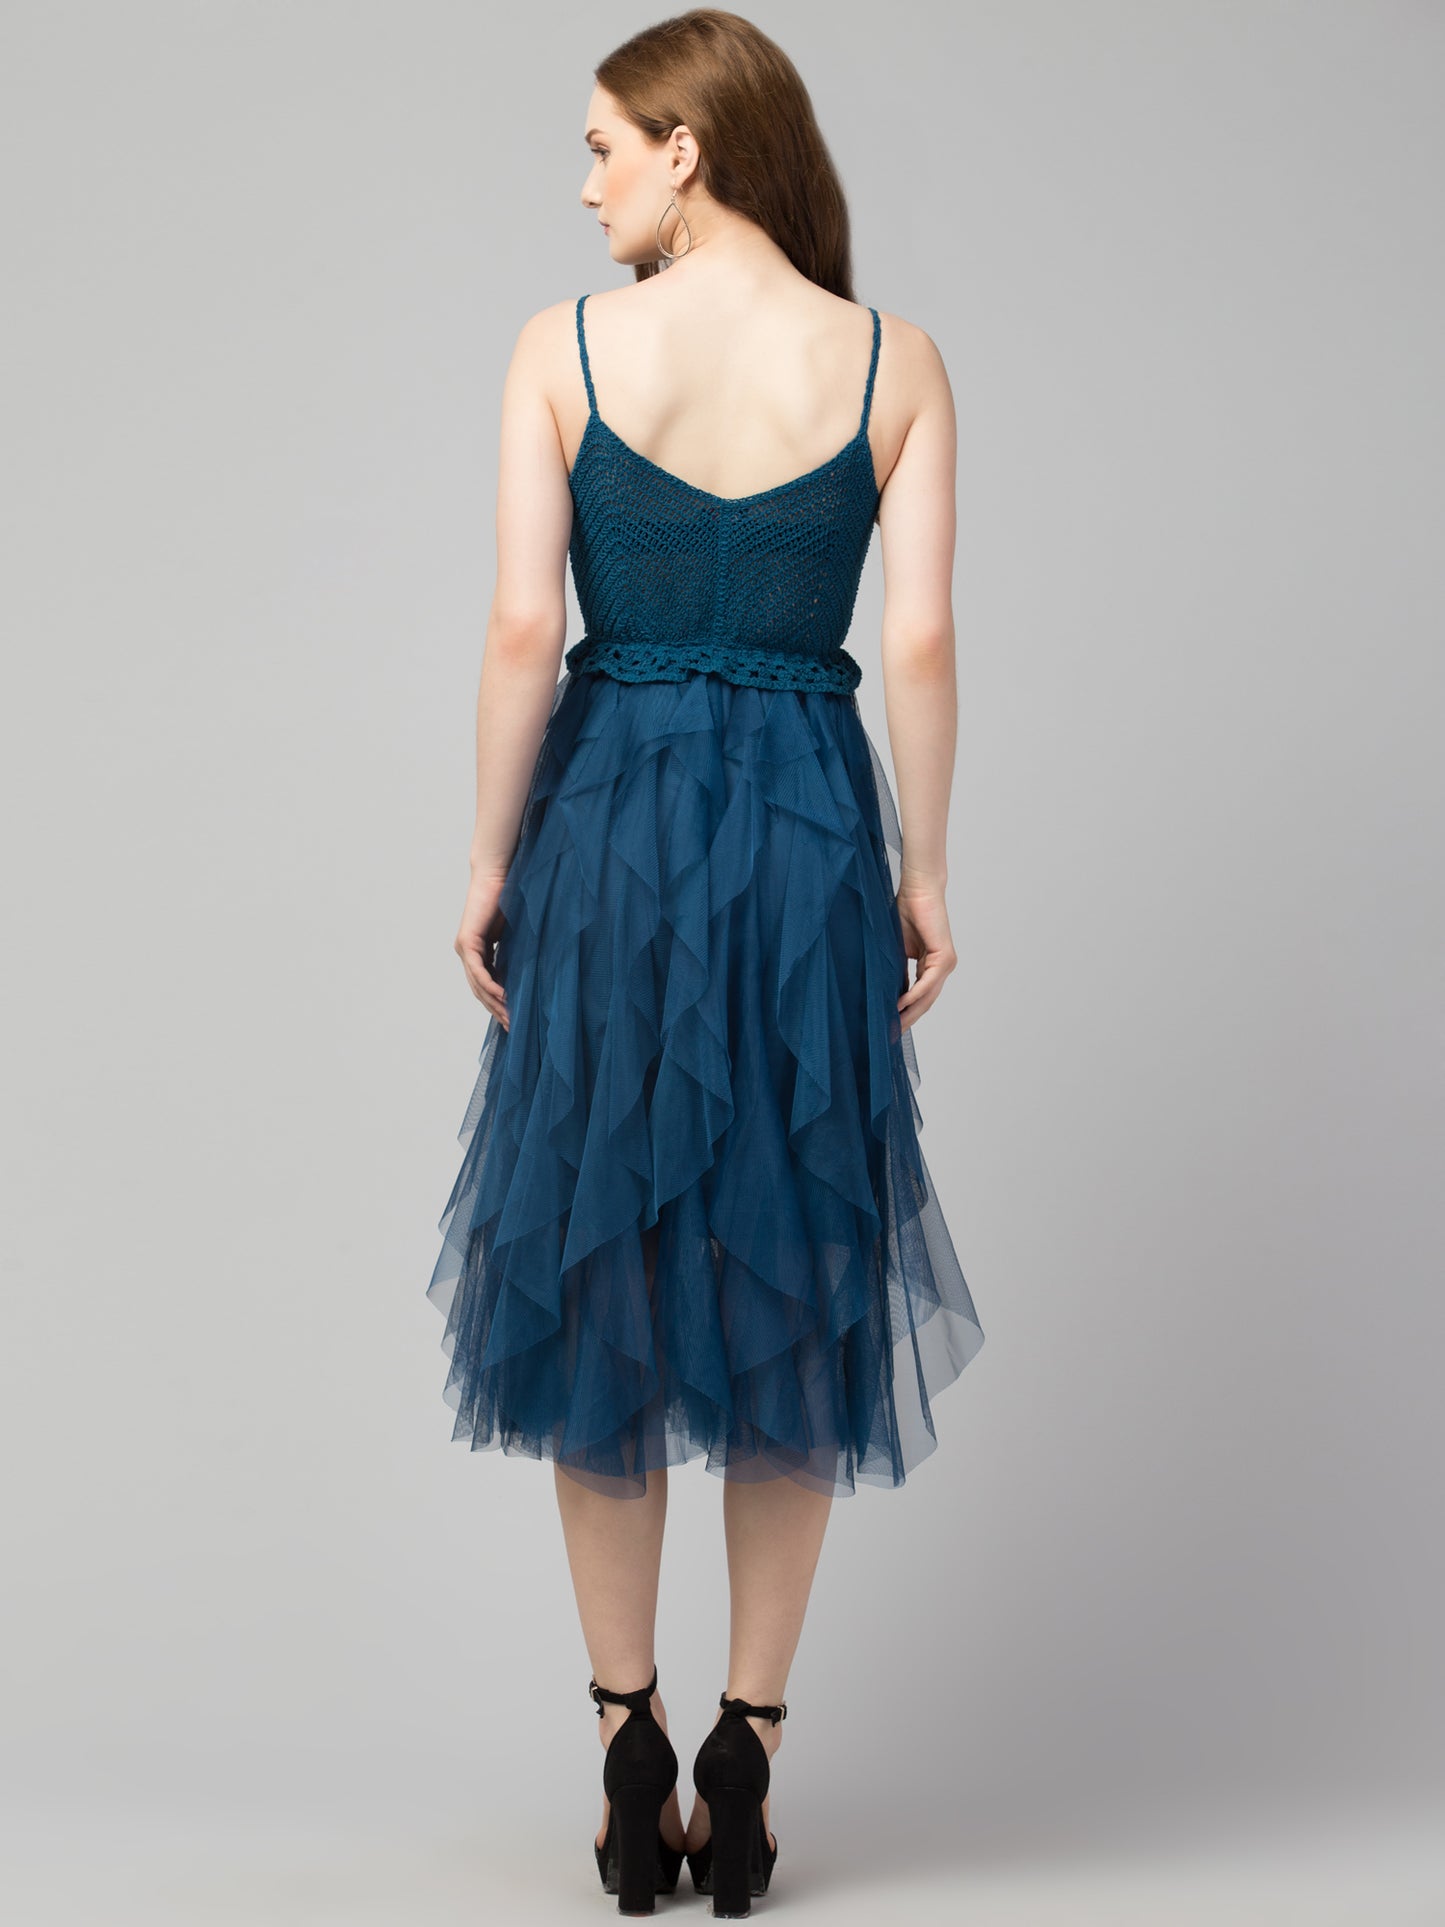 Blue A-Line Crosia and Net Party Wear Dress